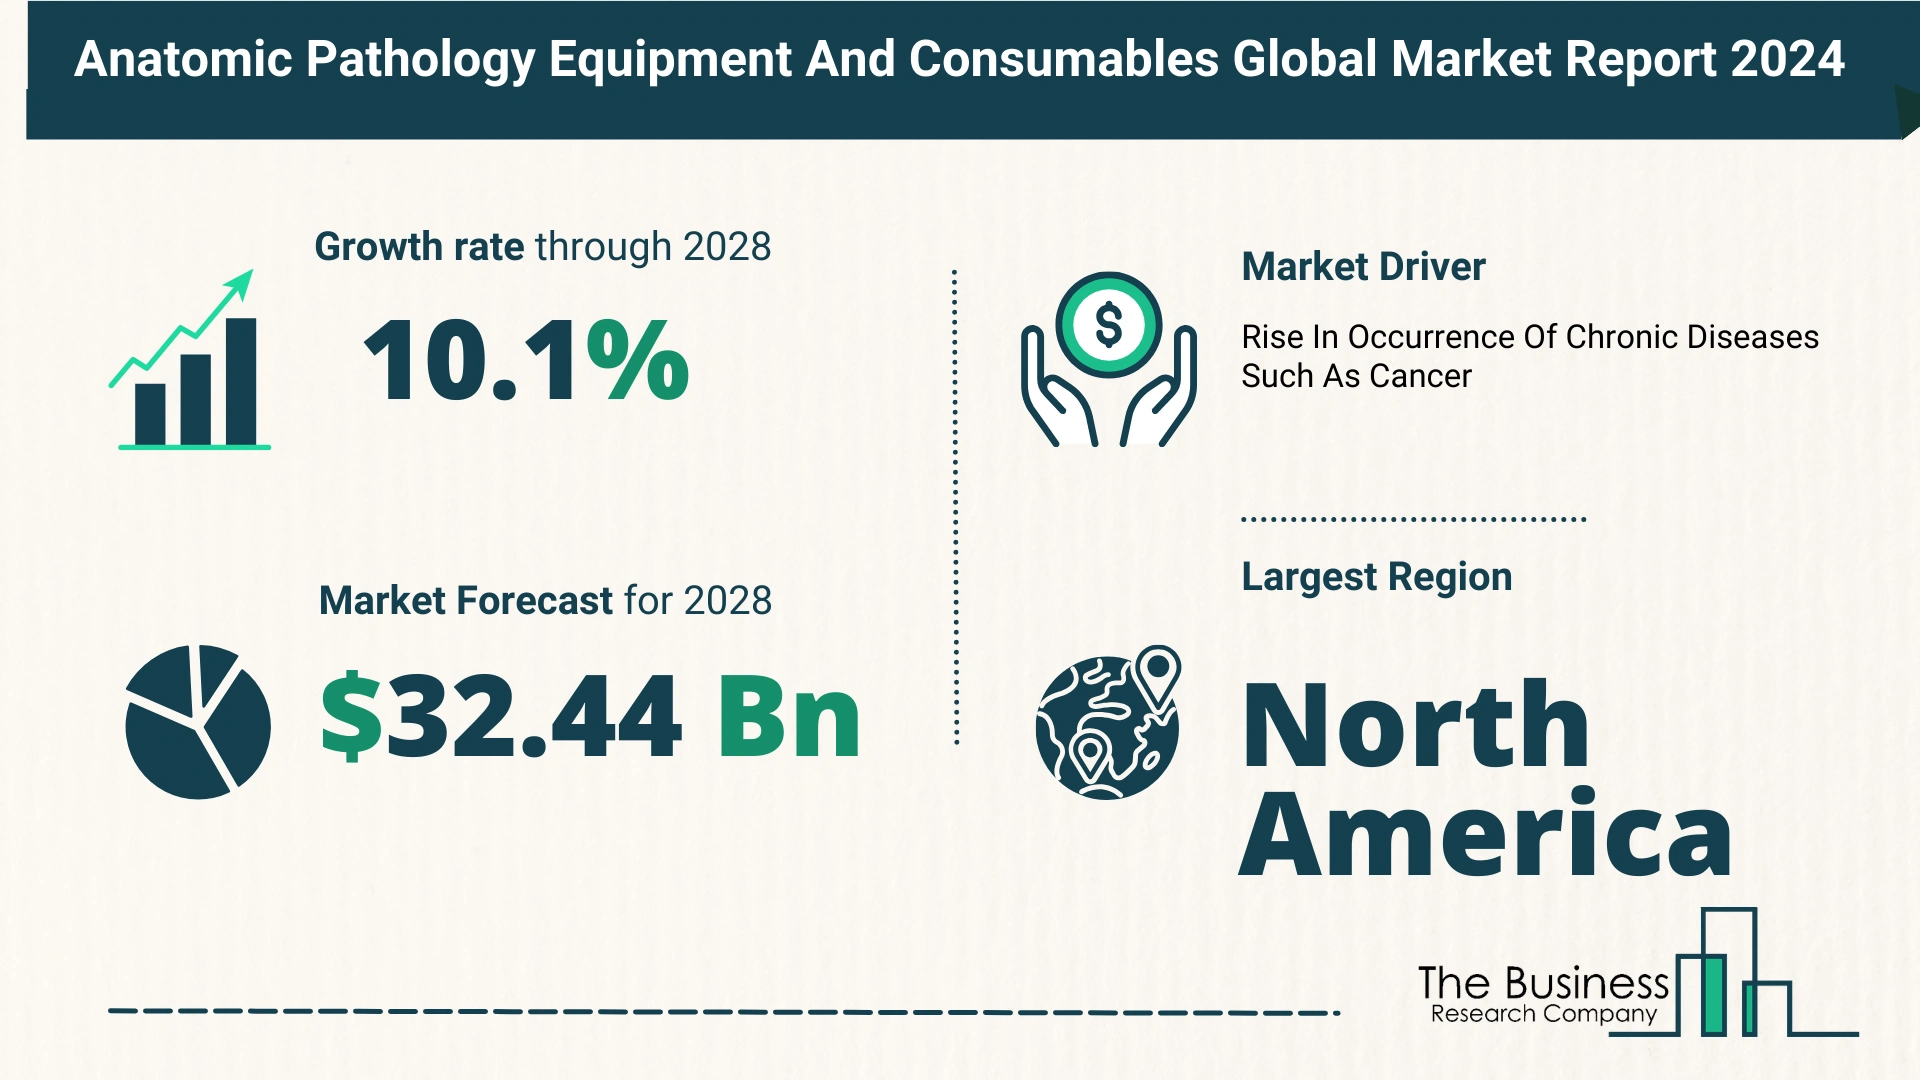 Global Anatomic Pathology Equipment and Consumables Market Size